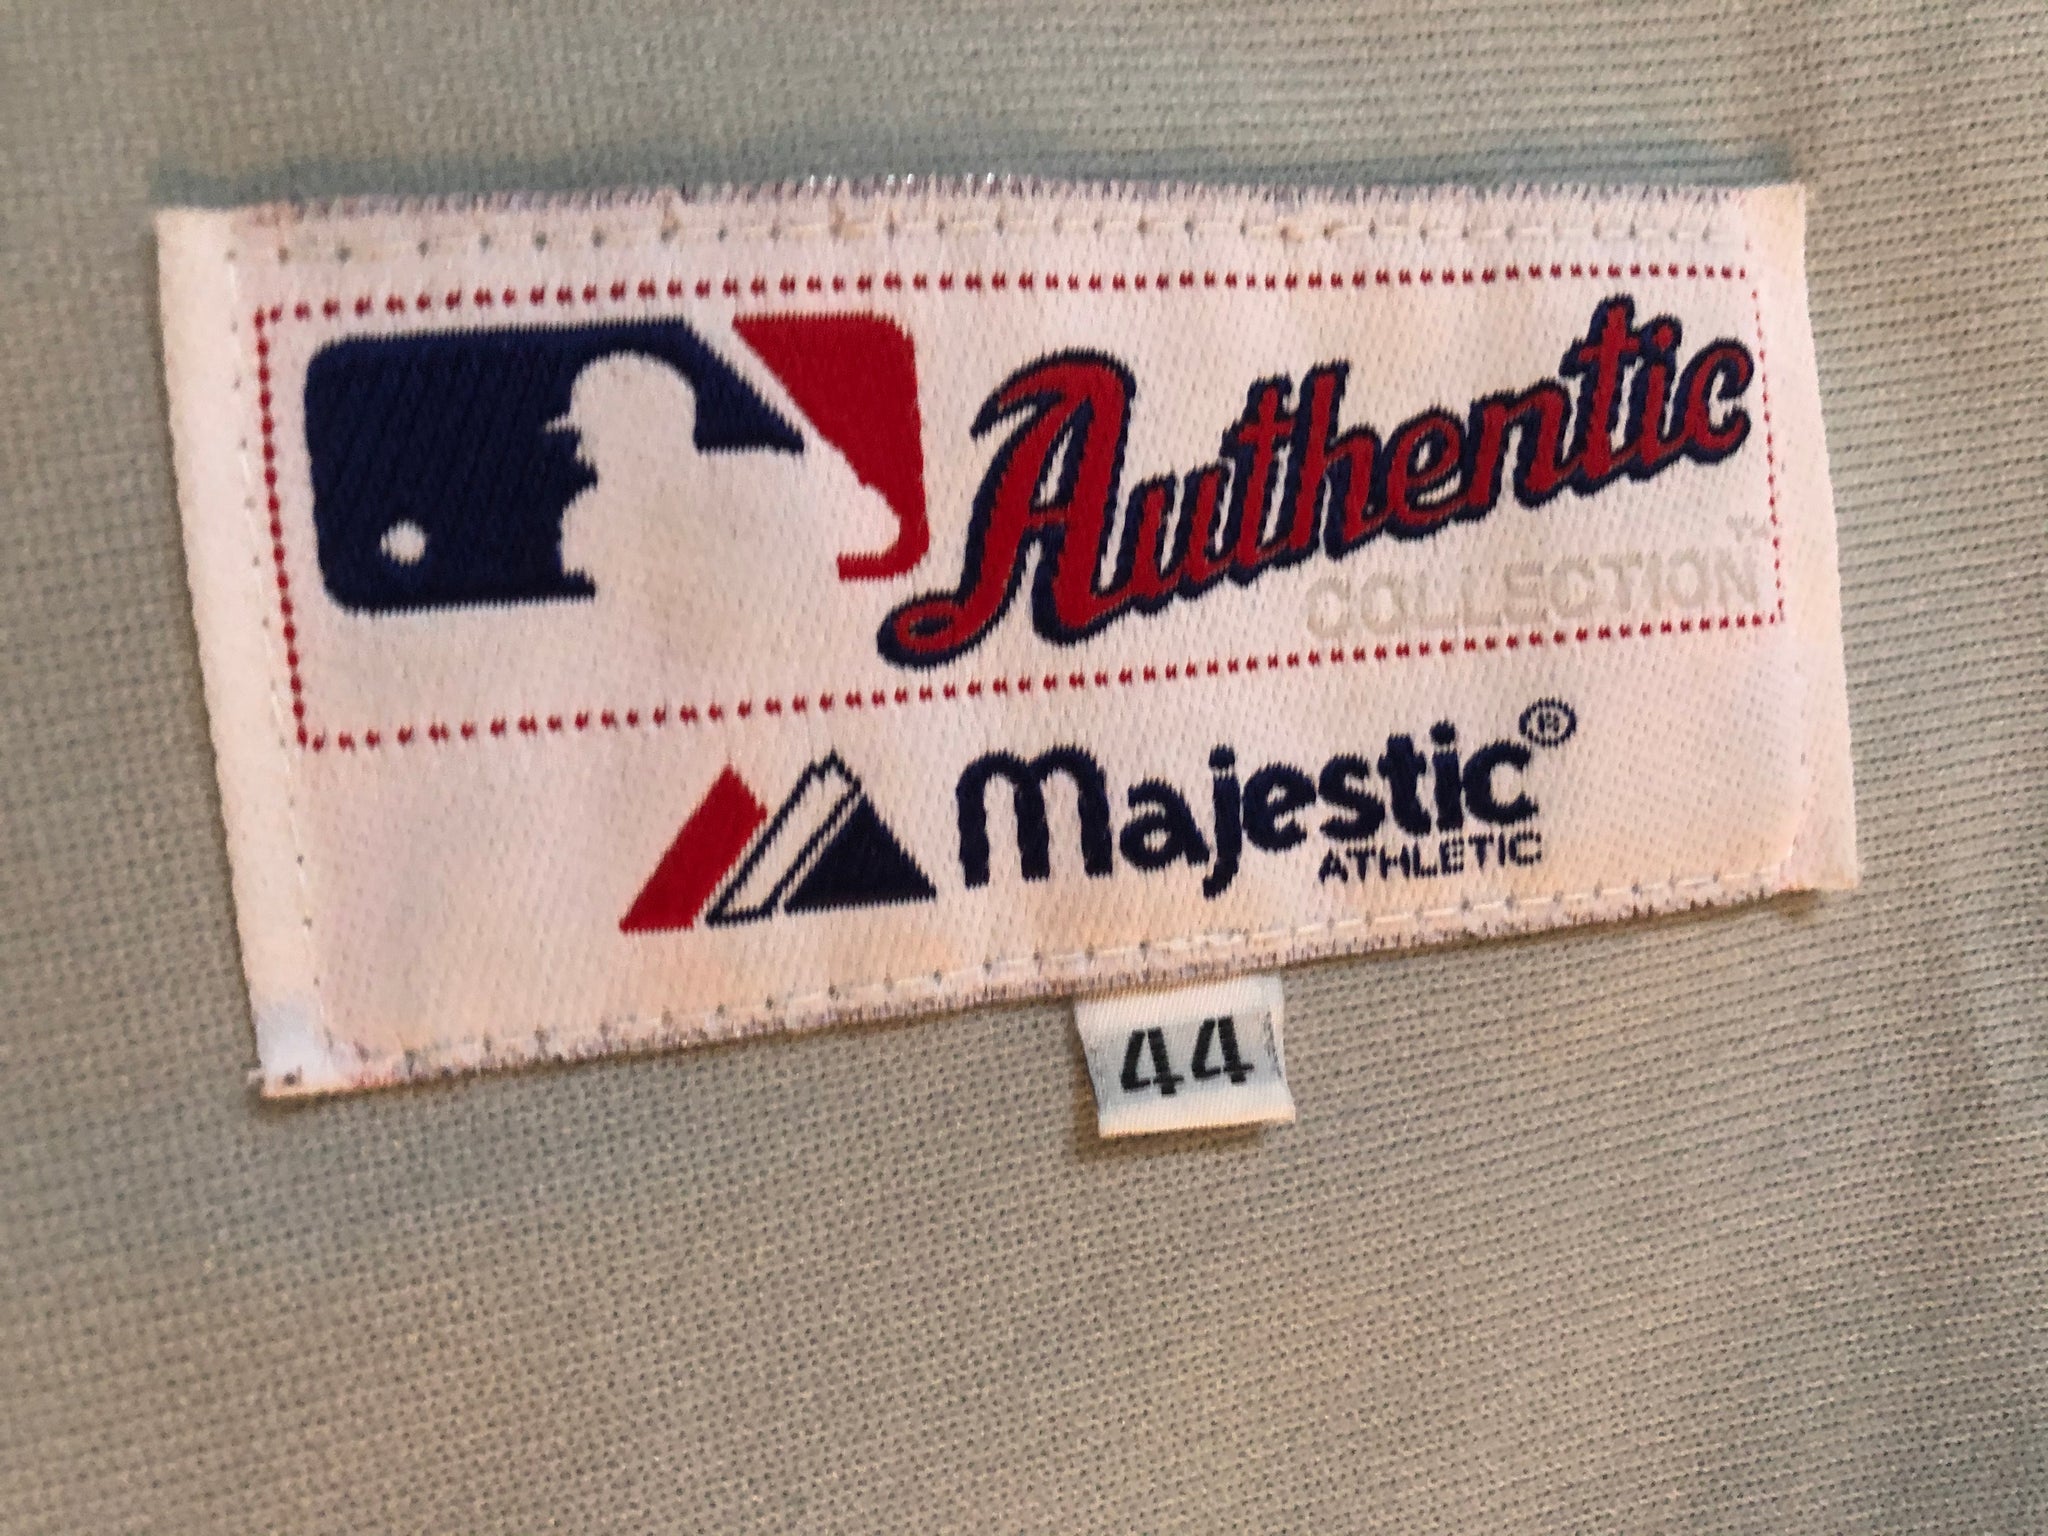 Philadelphia Phillies Ryan Howard Majestic Authentic Baseball Jersey, –  Stuck In The 90s Sports